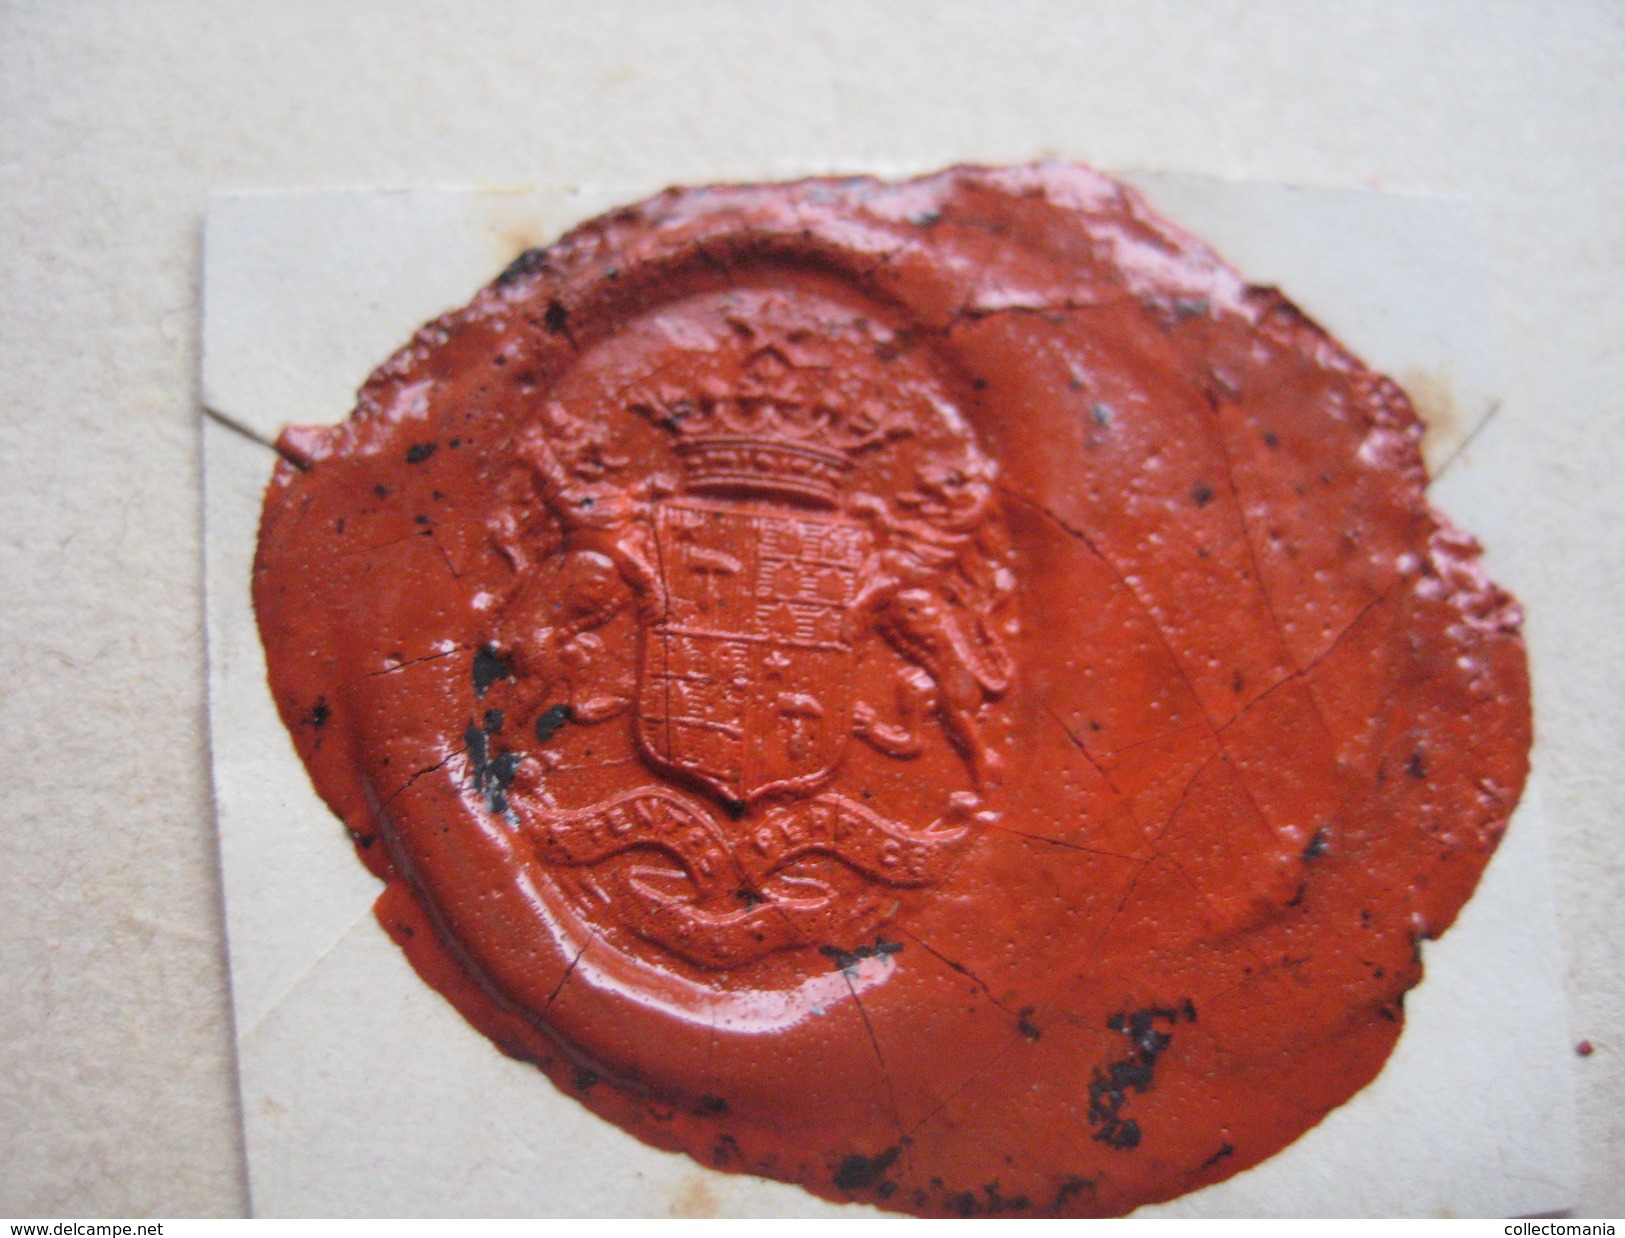 zegels van was - wax seals - lakzegels collection, 2cm à 4cm, before 1900 - sceaux de cire - adel familiekunde